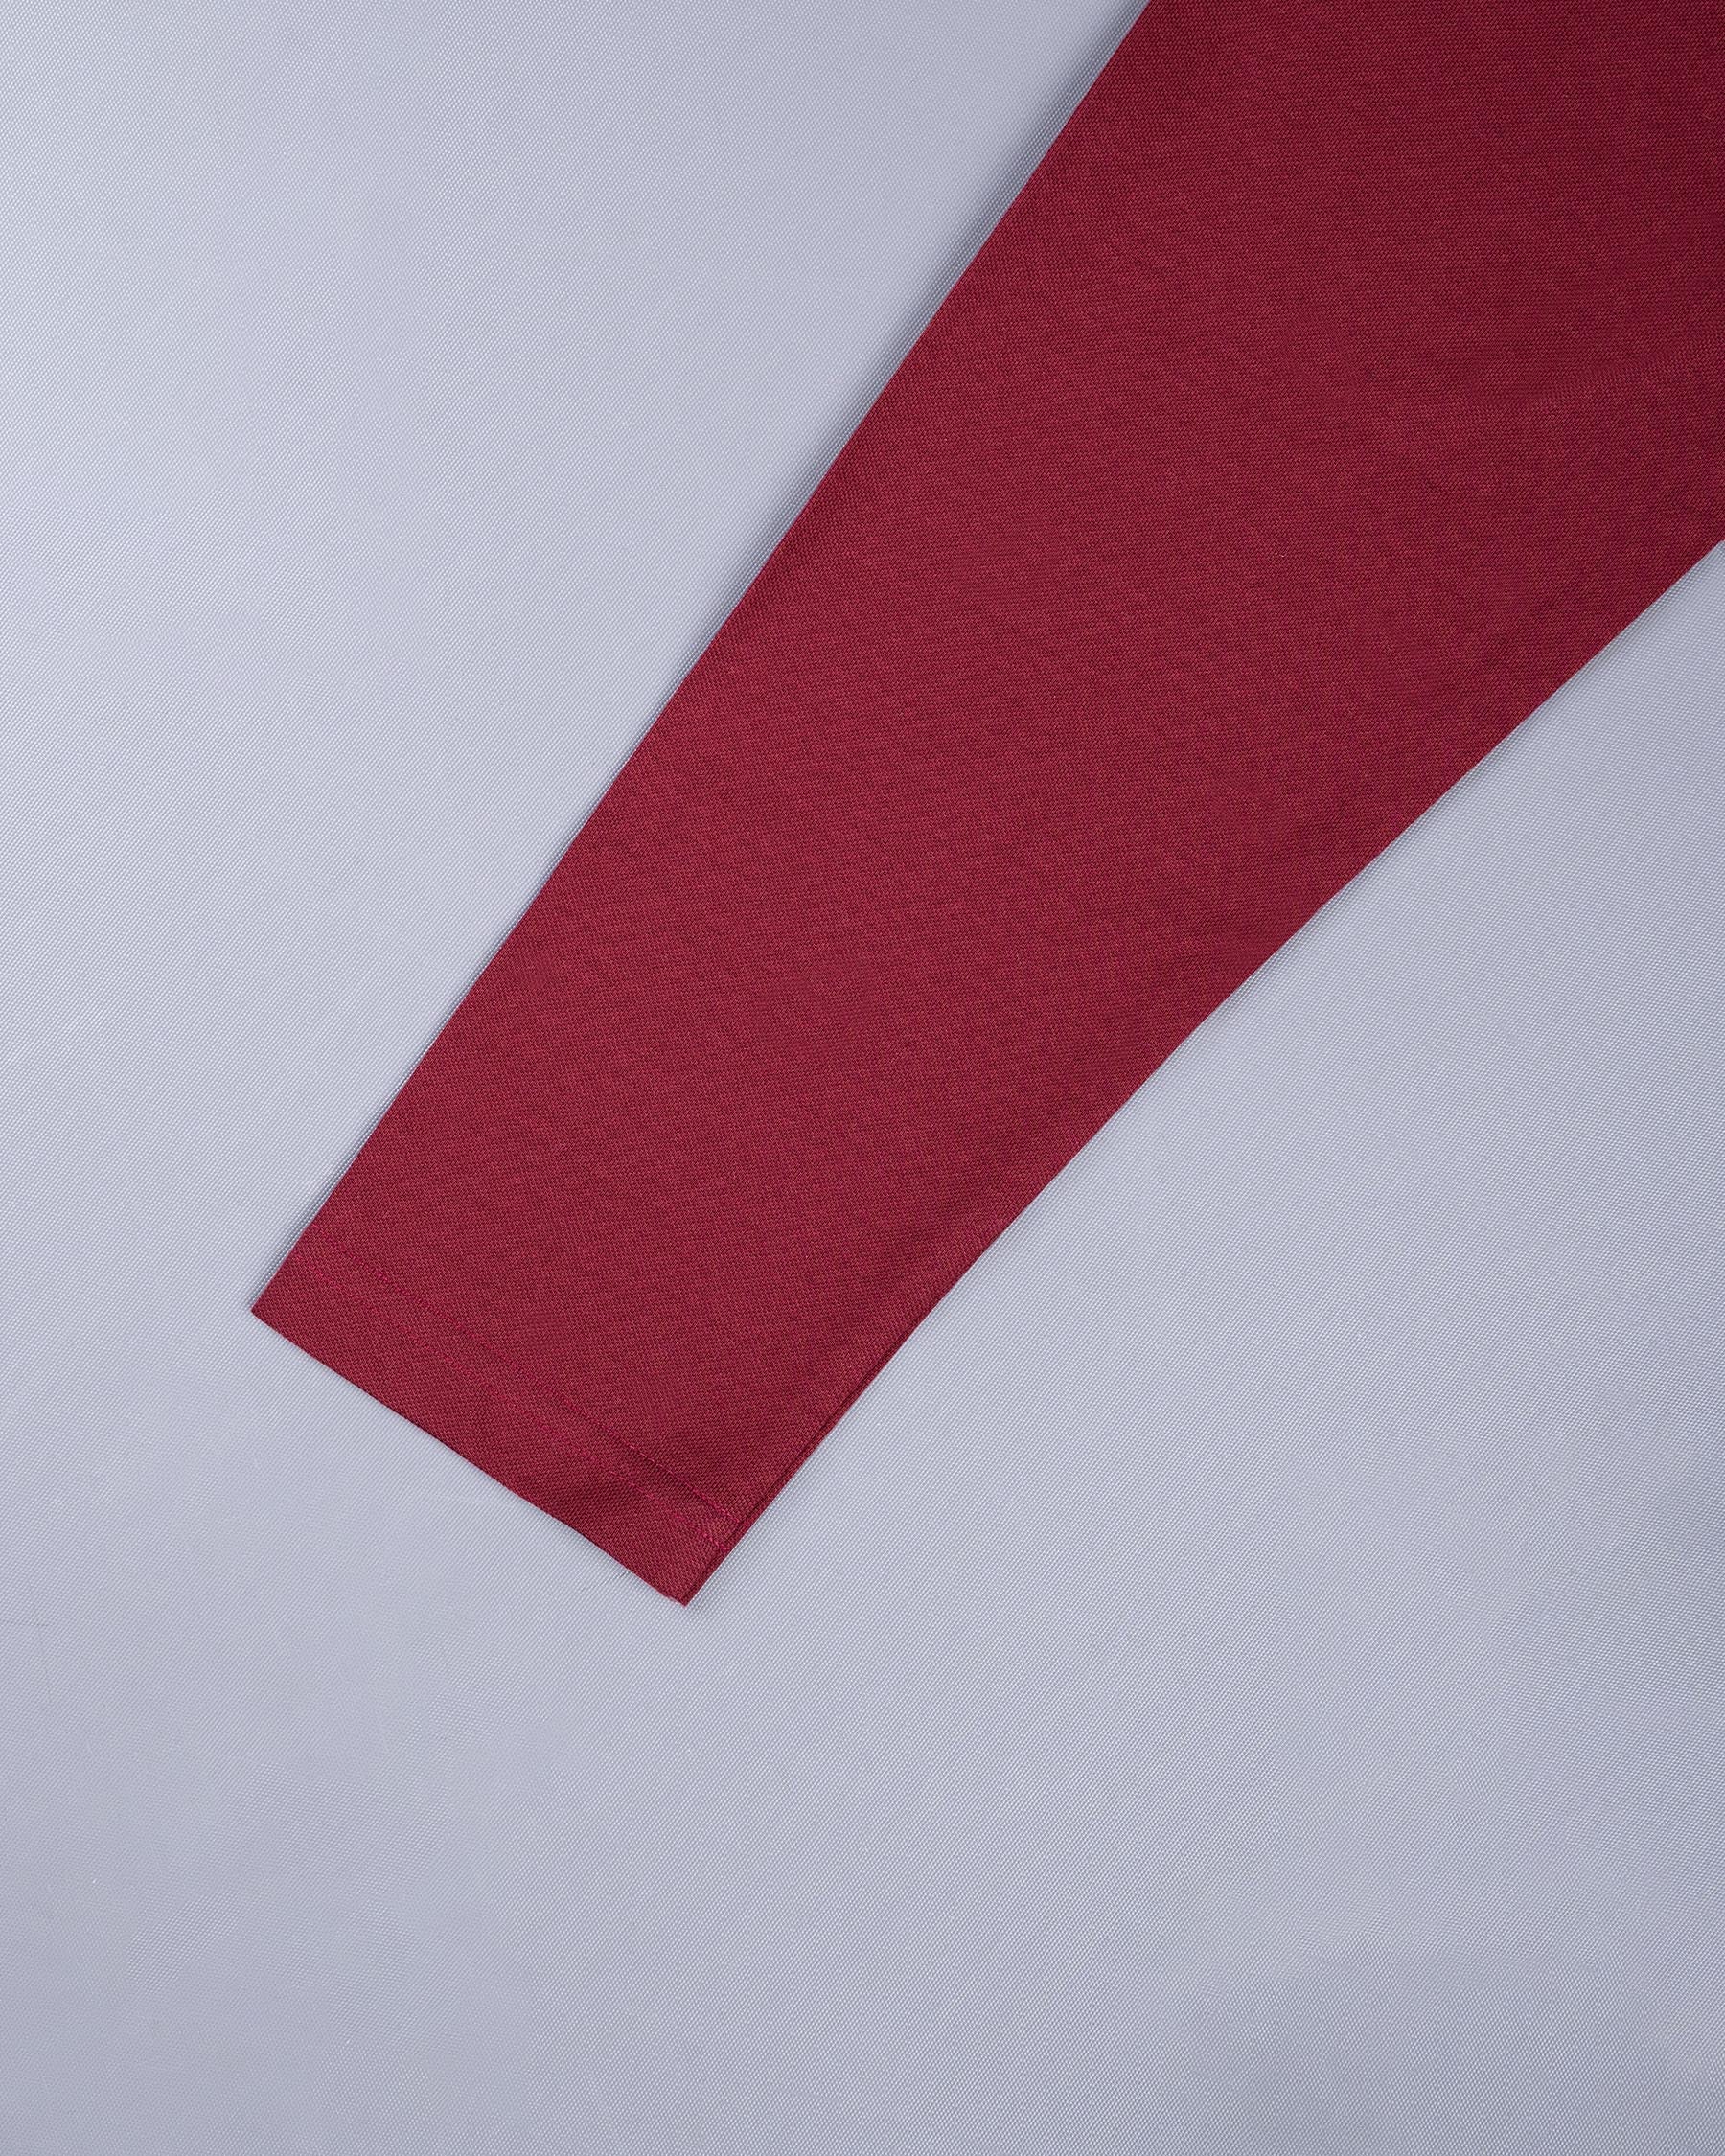 Merlot Red Super Soft Full Sleeve Pique Polo TS563-S, TS563-M, TS563-L, TS563-XL, TS563-XXL, TS563-3XL, TS563-4XL